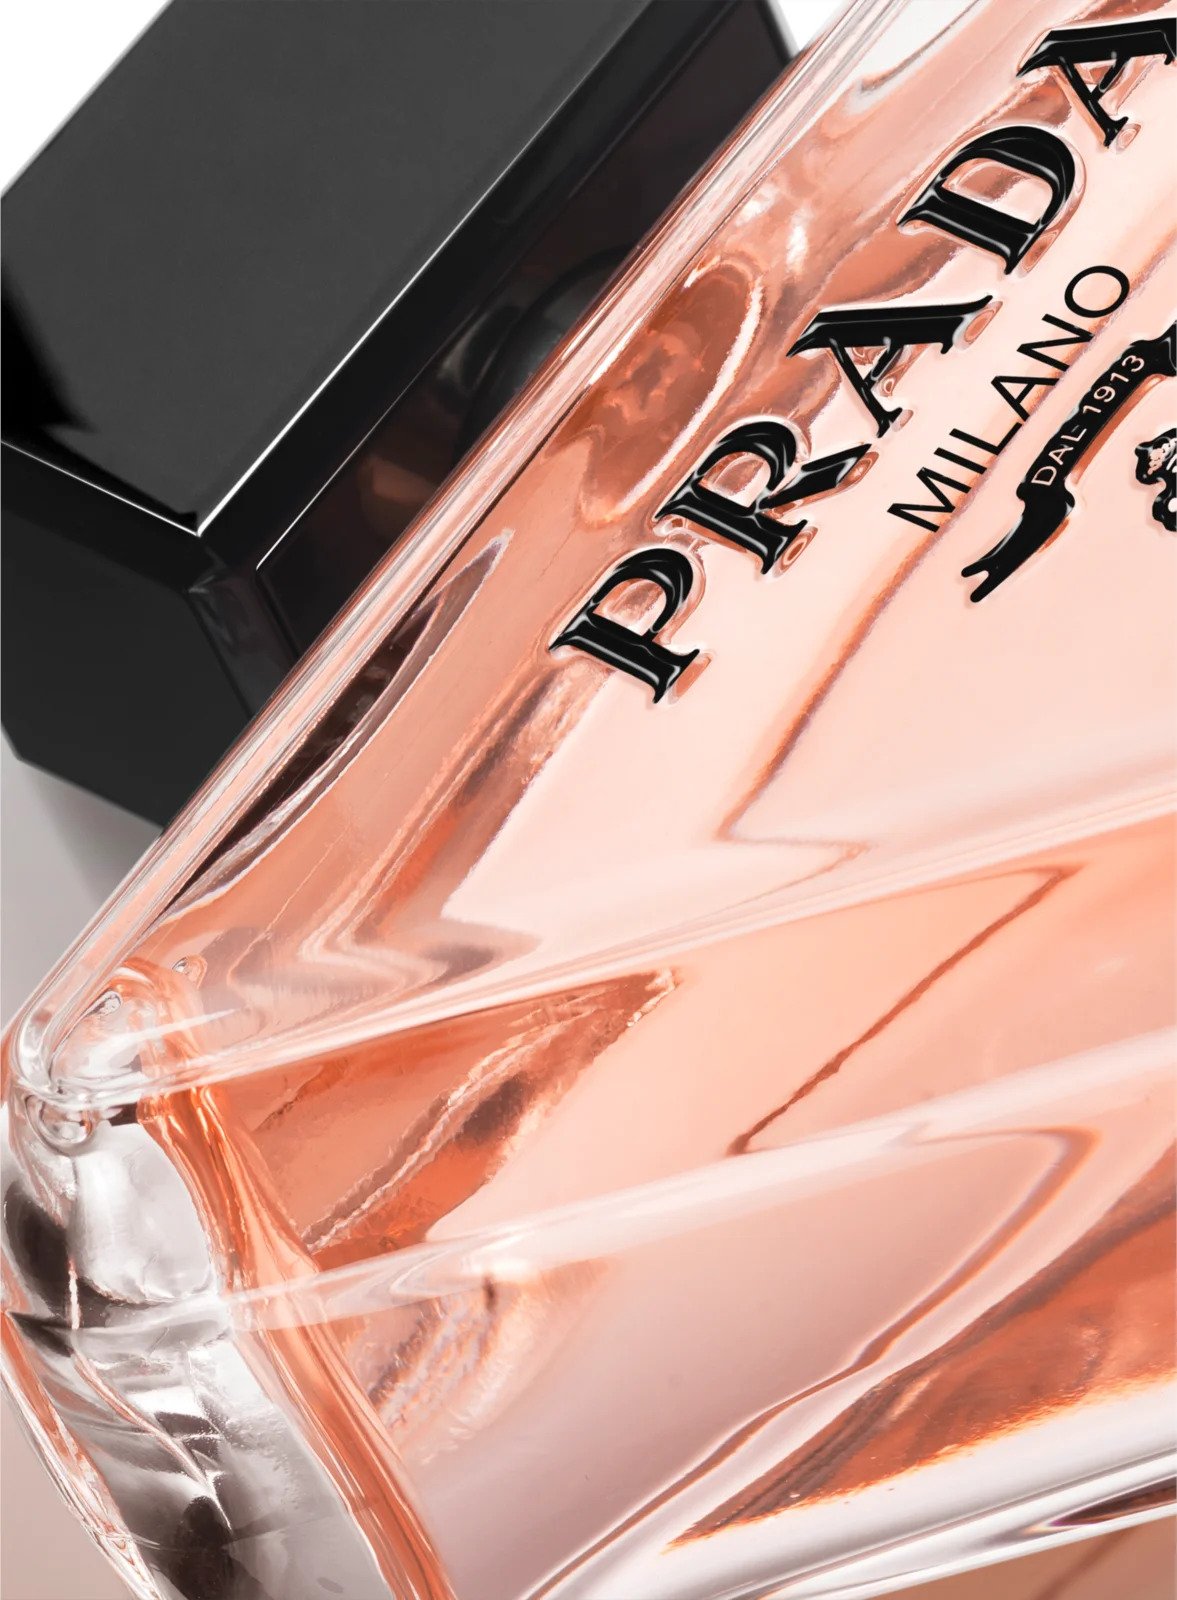 Perfumy Prada Paradoxe - zapach, który powinna mieć każda it-girl